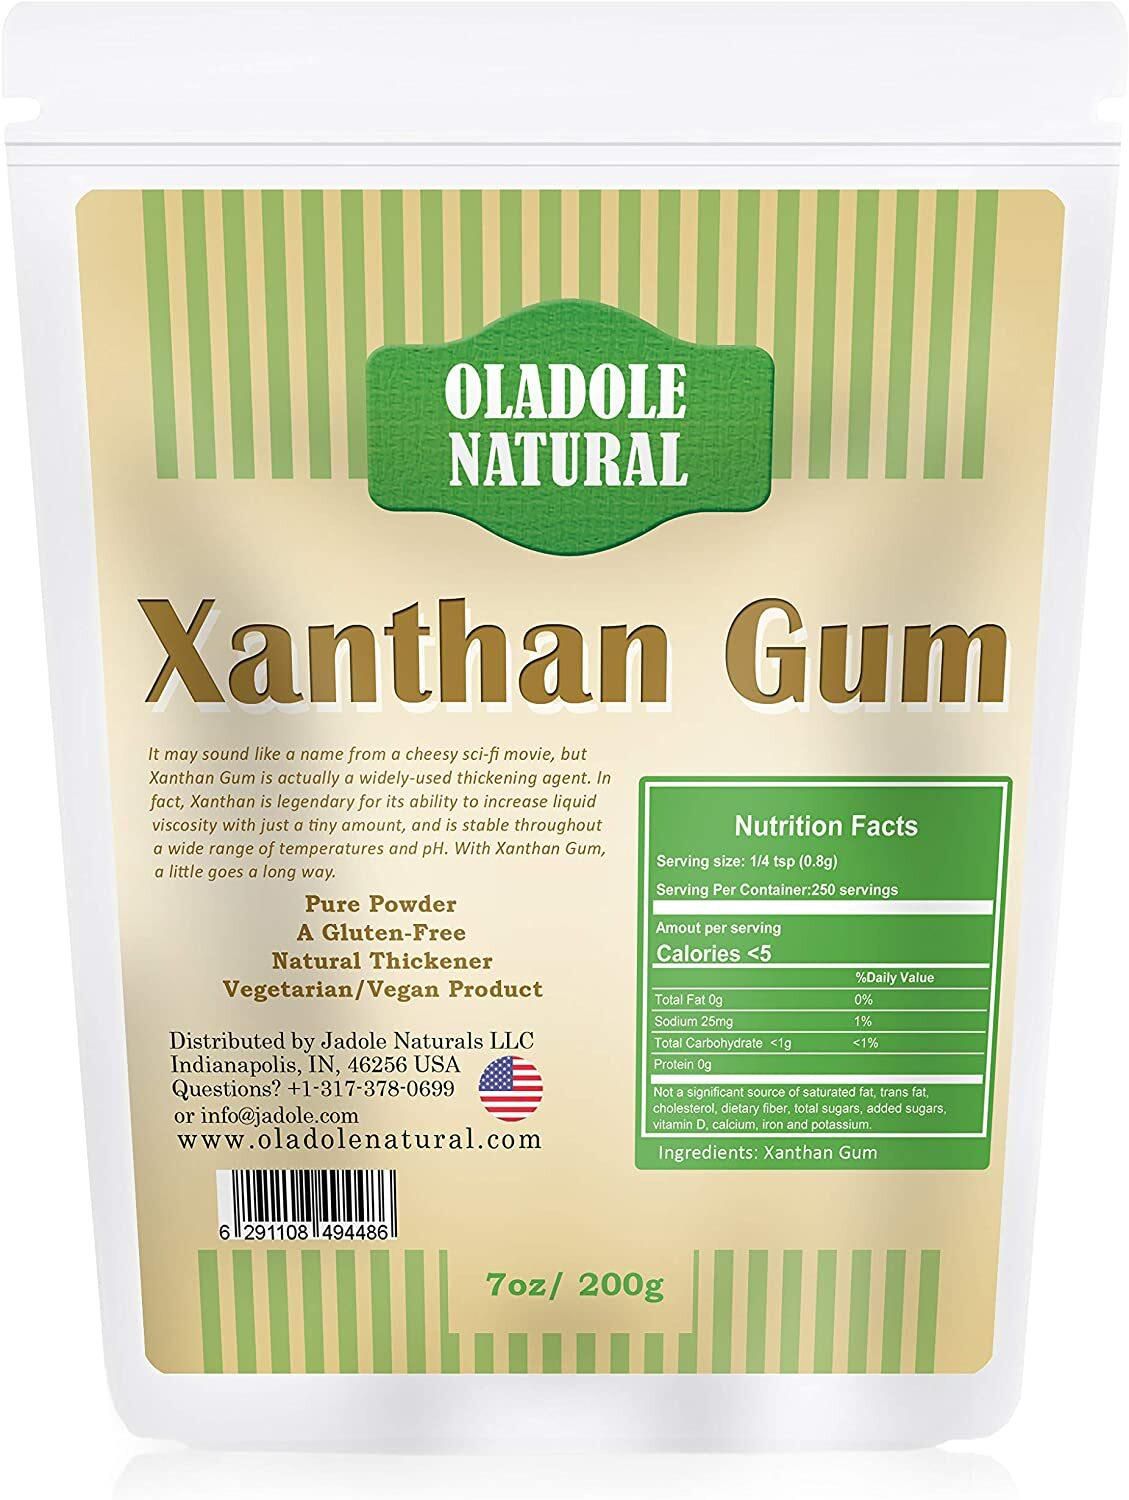 Oladole Natural Premium Quality Xanthan Gum, Food Grade Thickener, Non Gmo, Gluten Free, 7OZ/200g